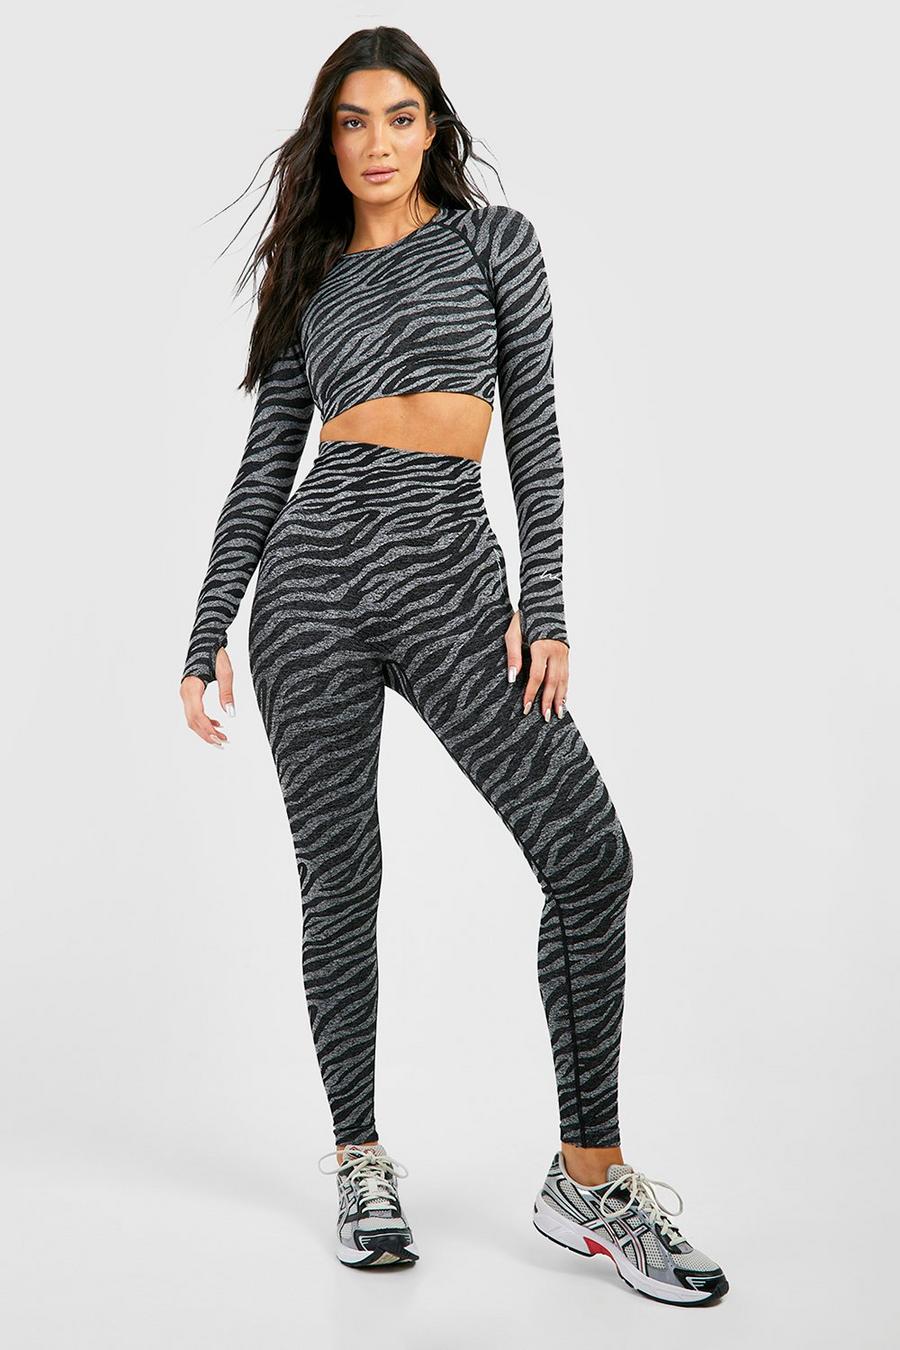 https://media.boohoo.com/i/boohoo/gzz34920_black_xl/female-black-zebra-contouring-seamless-gym-sculpt-leggings/?w=900&qlt=default&fmt.jp2.qlt=70&fmt=auto&sm=fit